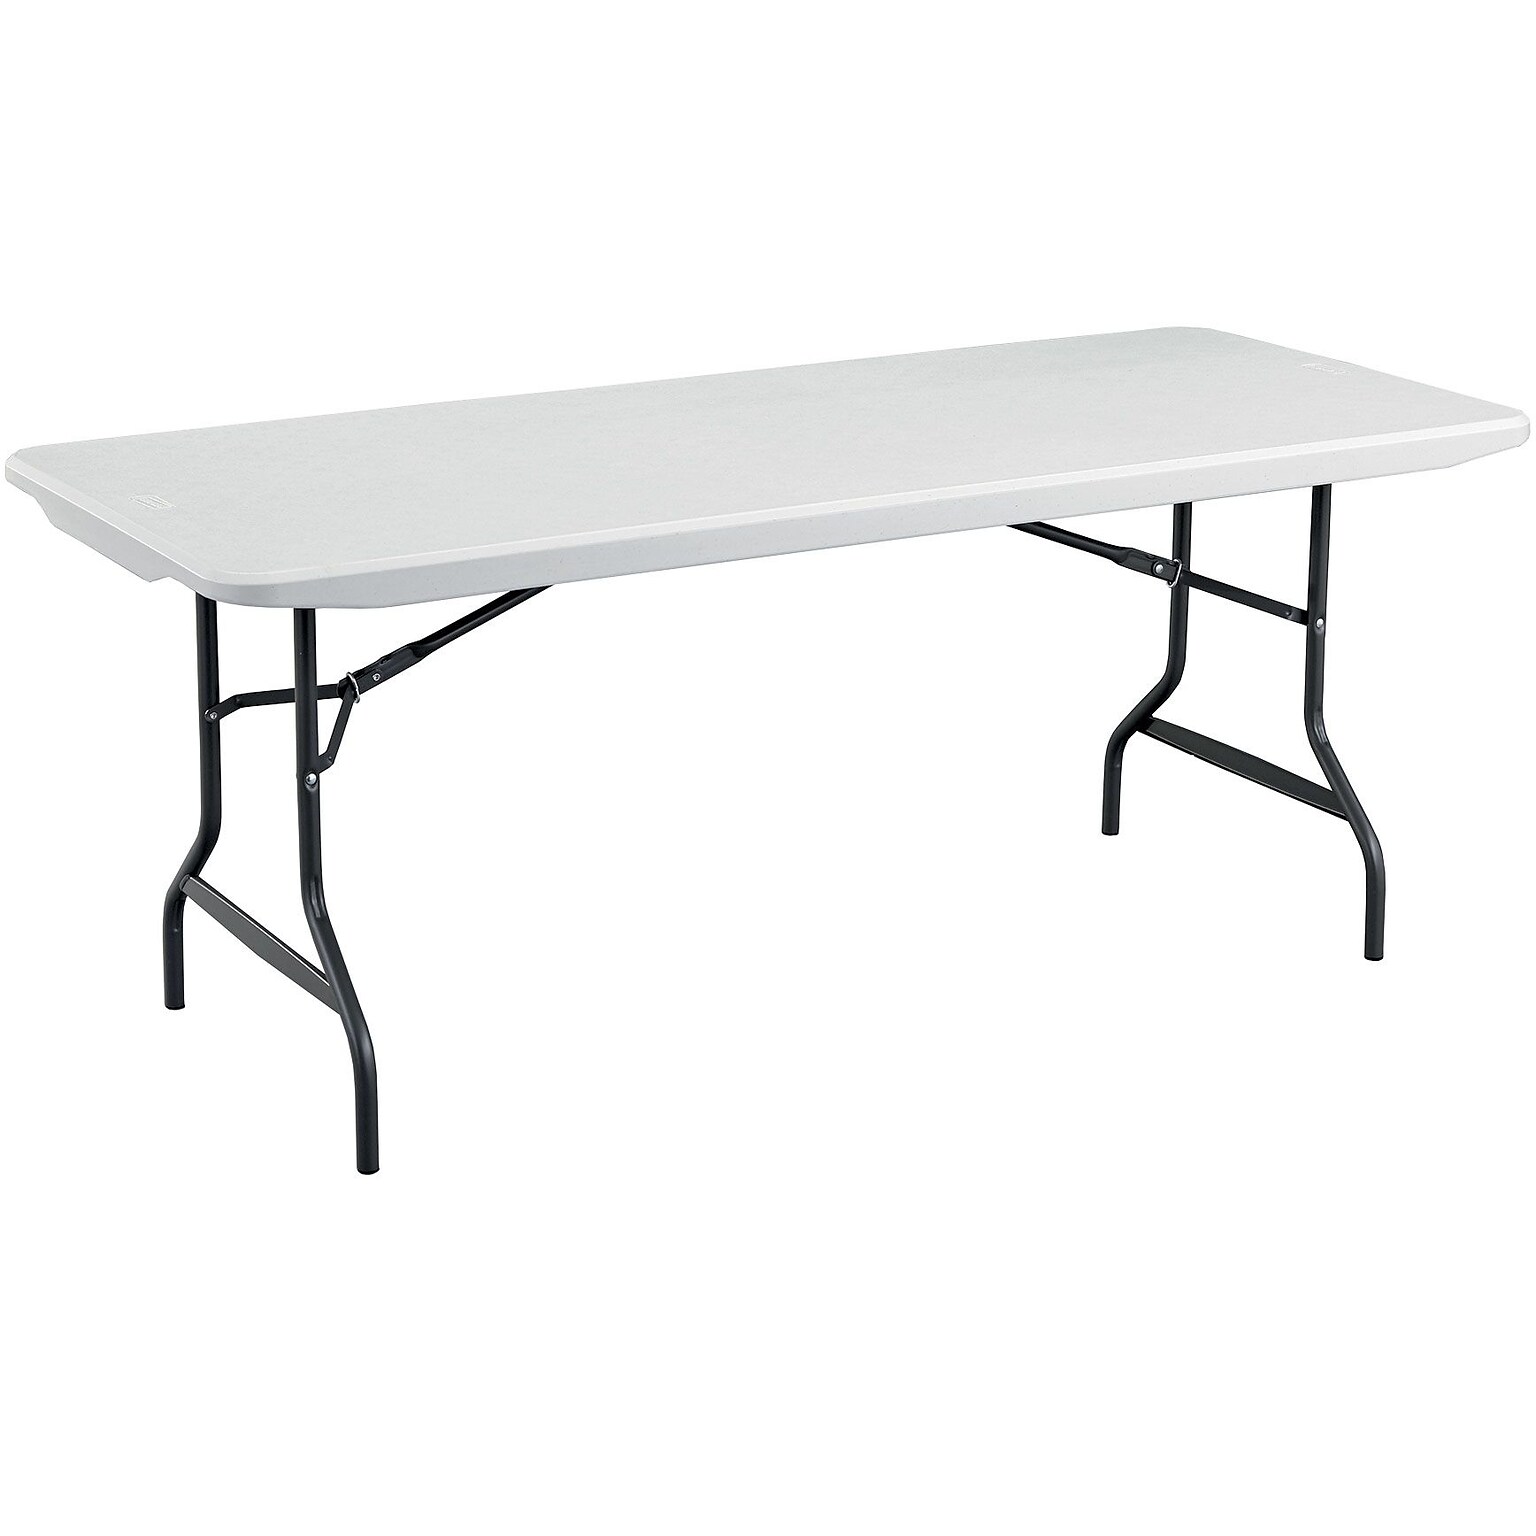 Quill Brand® Folding Table, 72L x 29W, Platinum (79123)